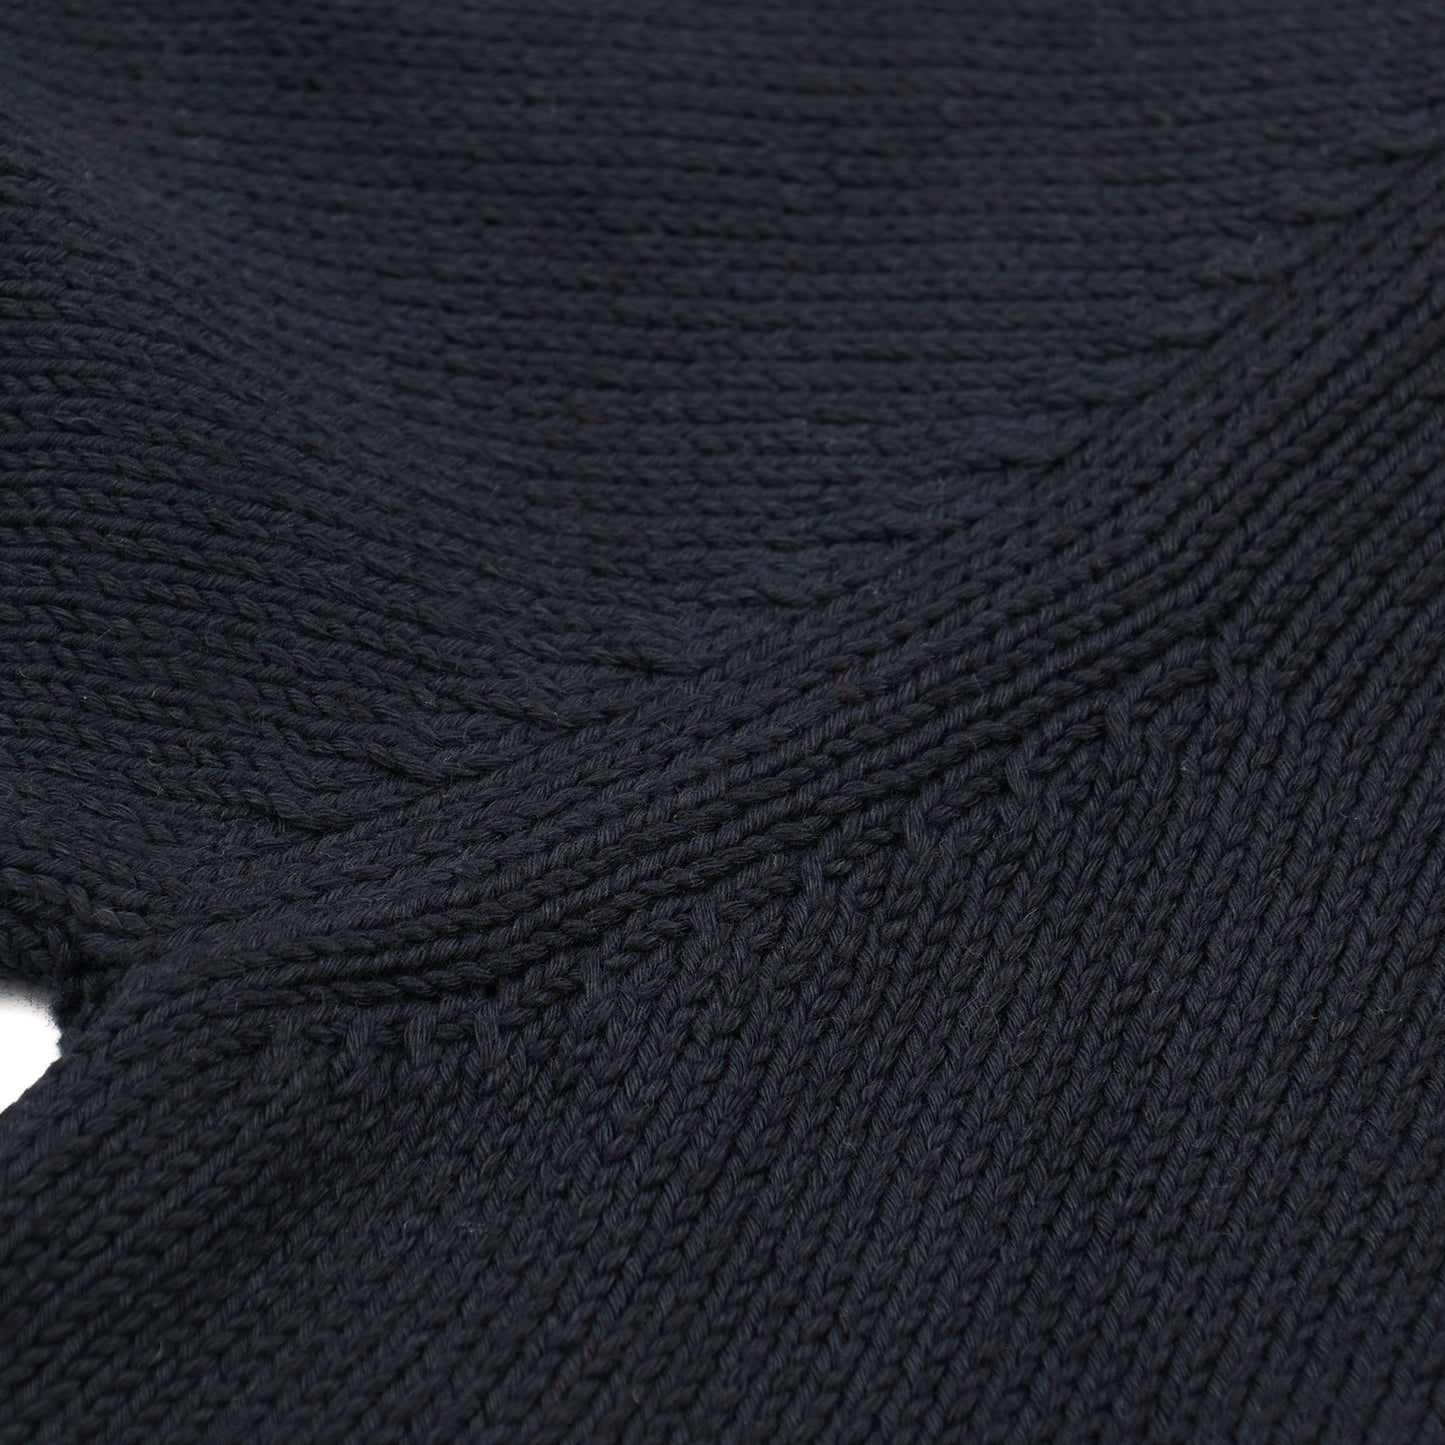 Cruciani Heavier Cotton Sweater - Top Shelf Apparel